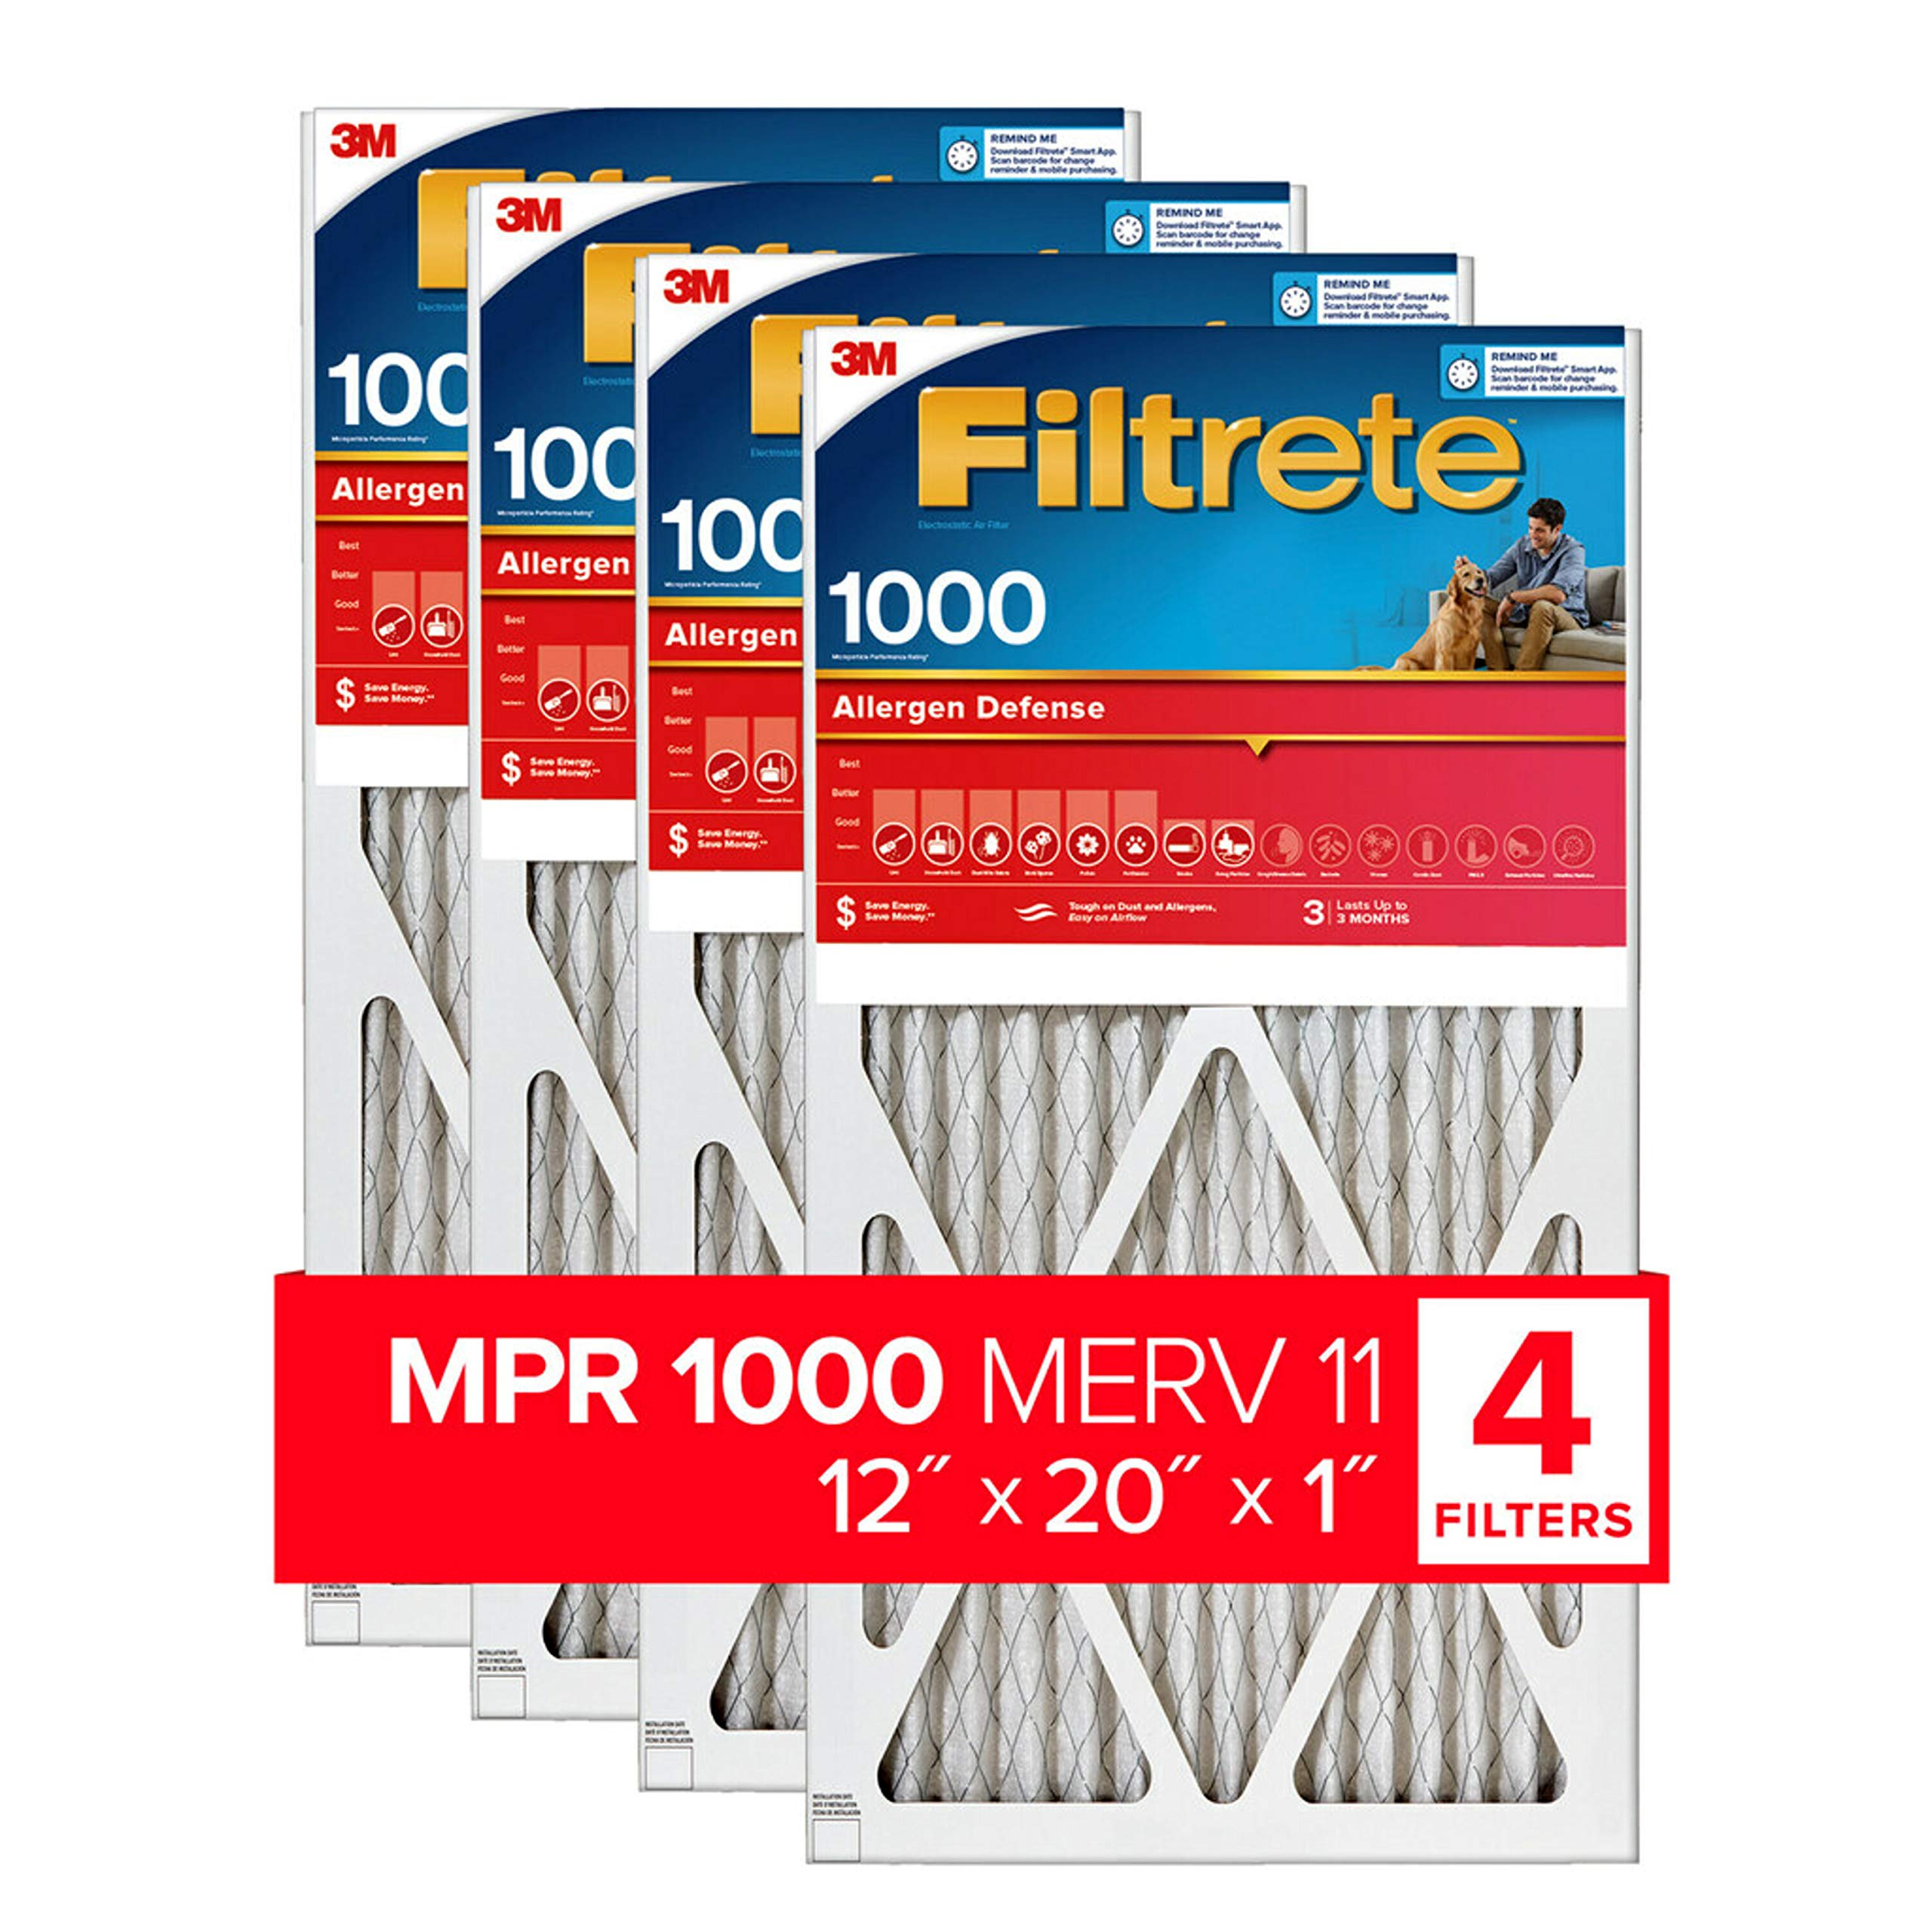 Filtrete 12x20x1 空气过滤器，MPR 1000，MERV 11，微过敏原防护 3 个月褶皱 1 英寸空气过滤器，4 个过滤器